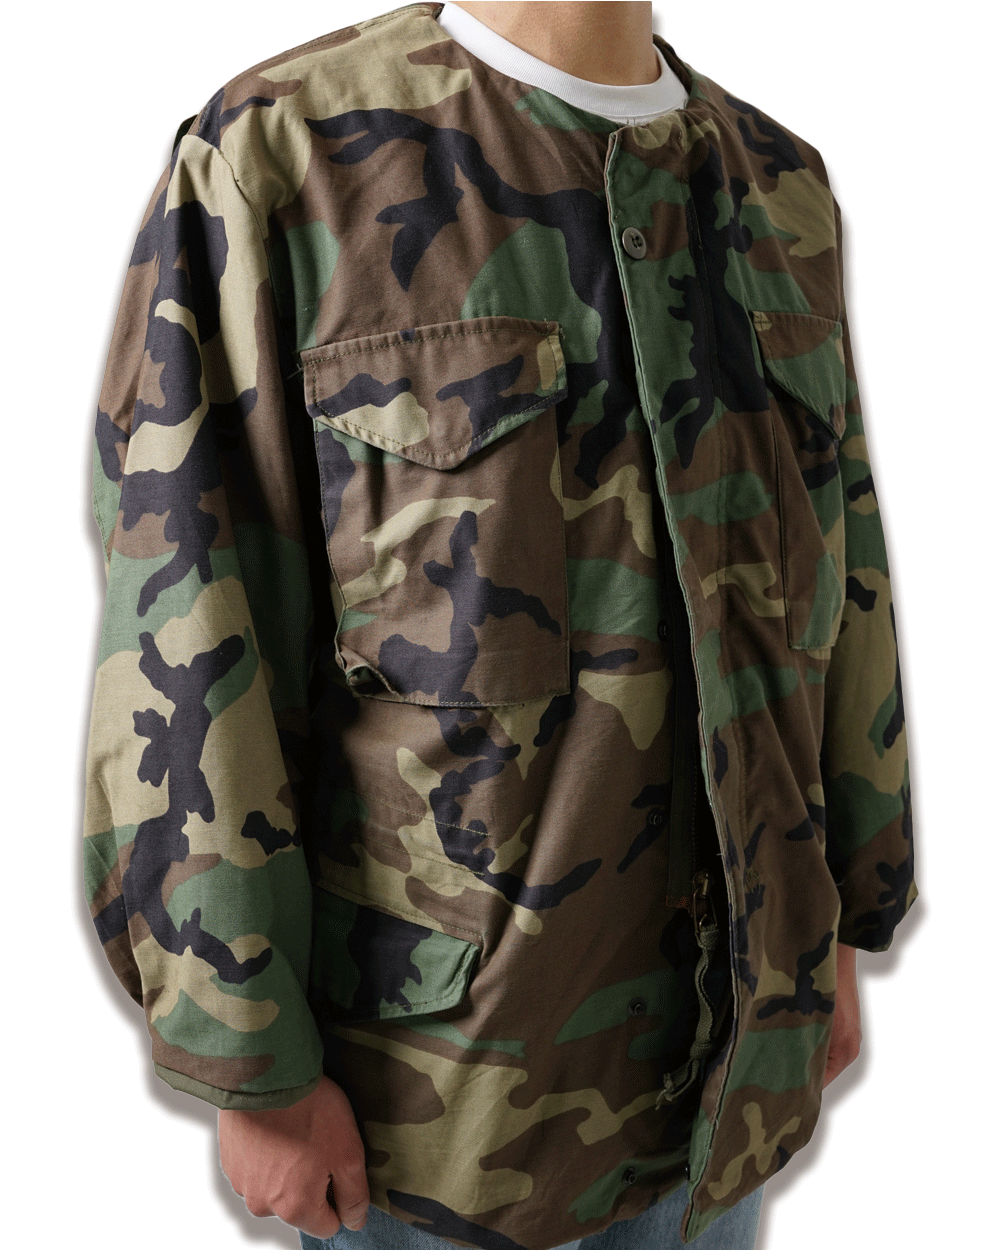 RE M-65 Military Camo Jacket (Military)